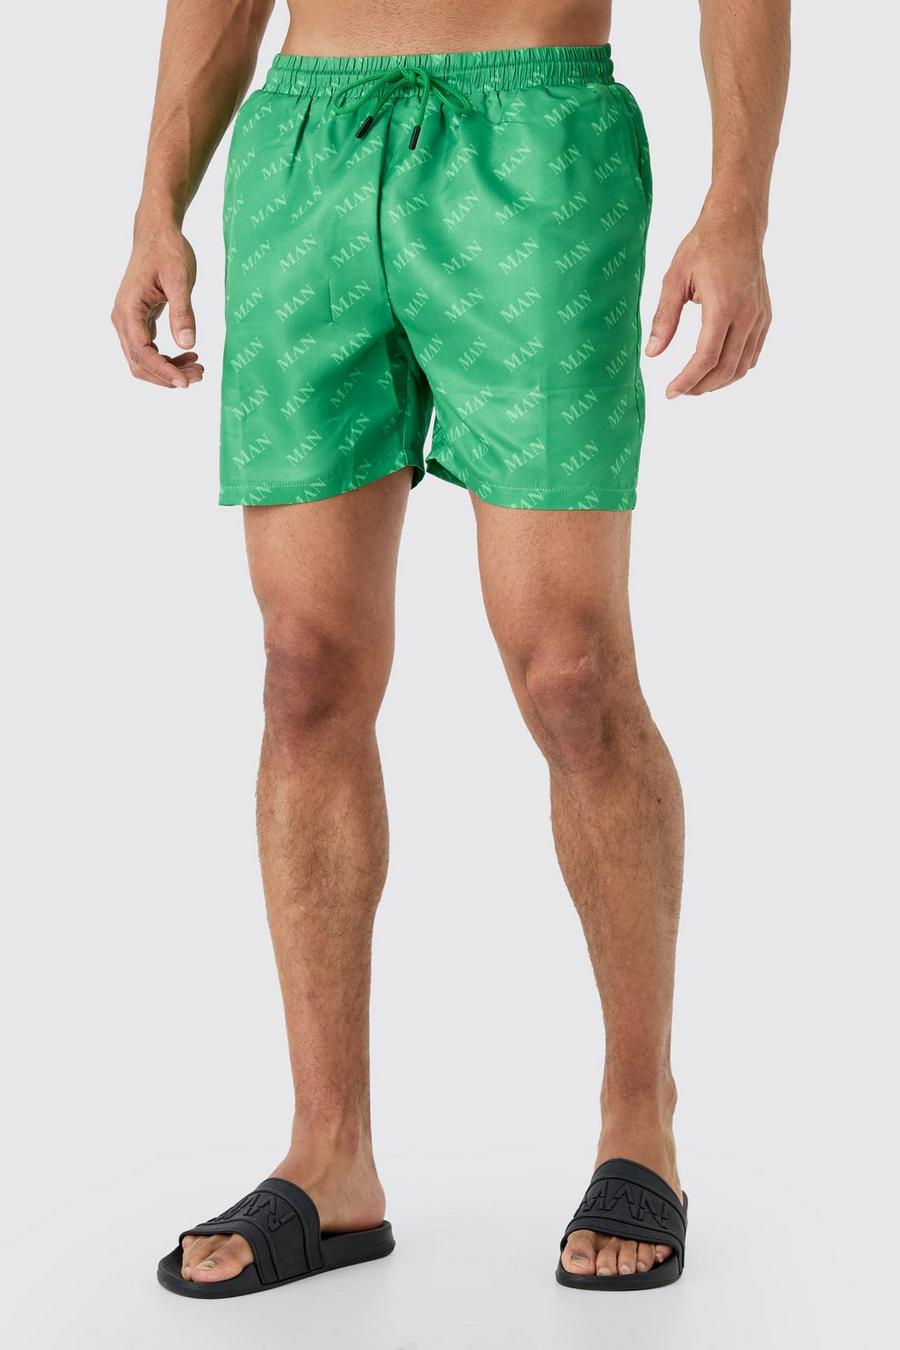 Green Mid Length Man Swim Short